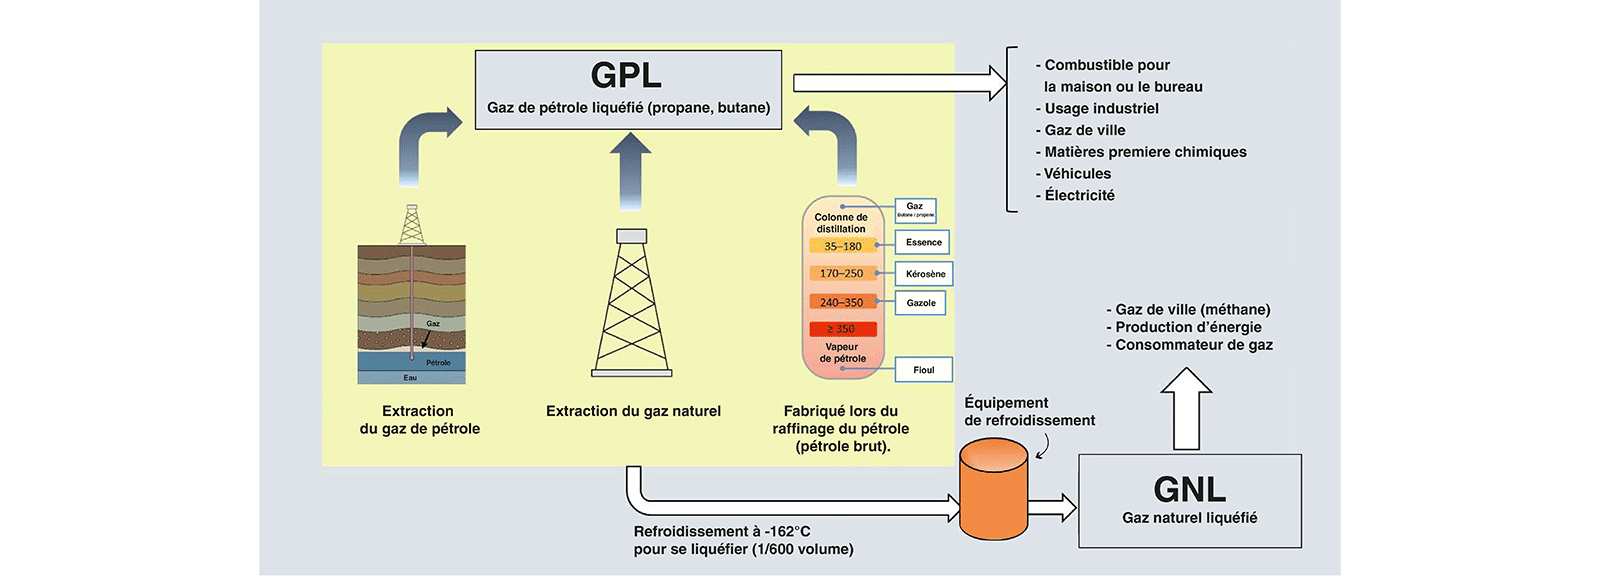 Gaz naturel liquéfie (GNL) - Gaz pétrolier liquéfié (GPL)